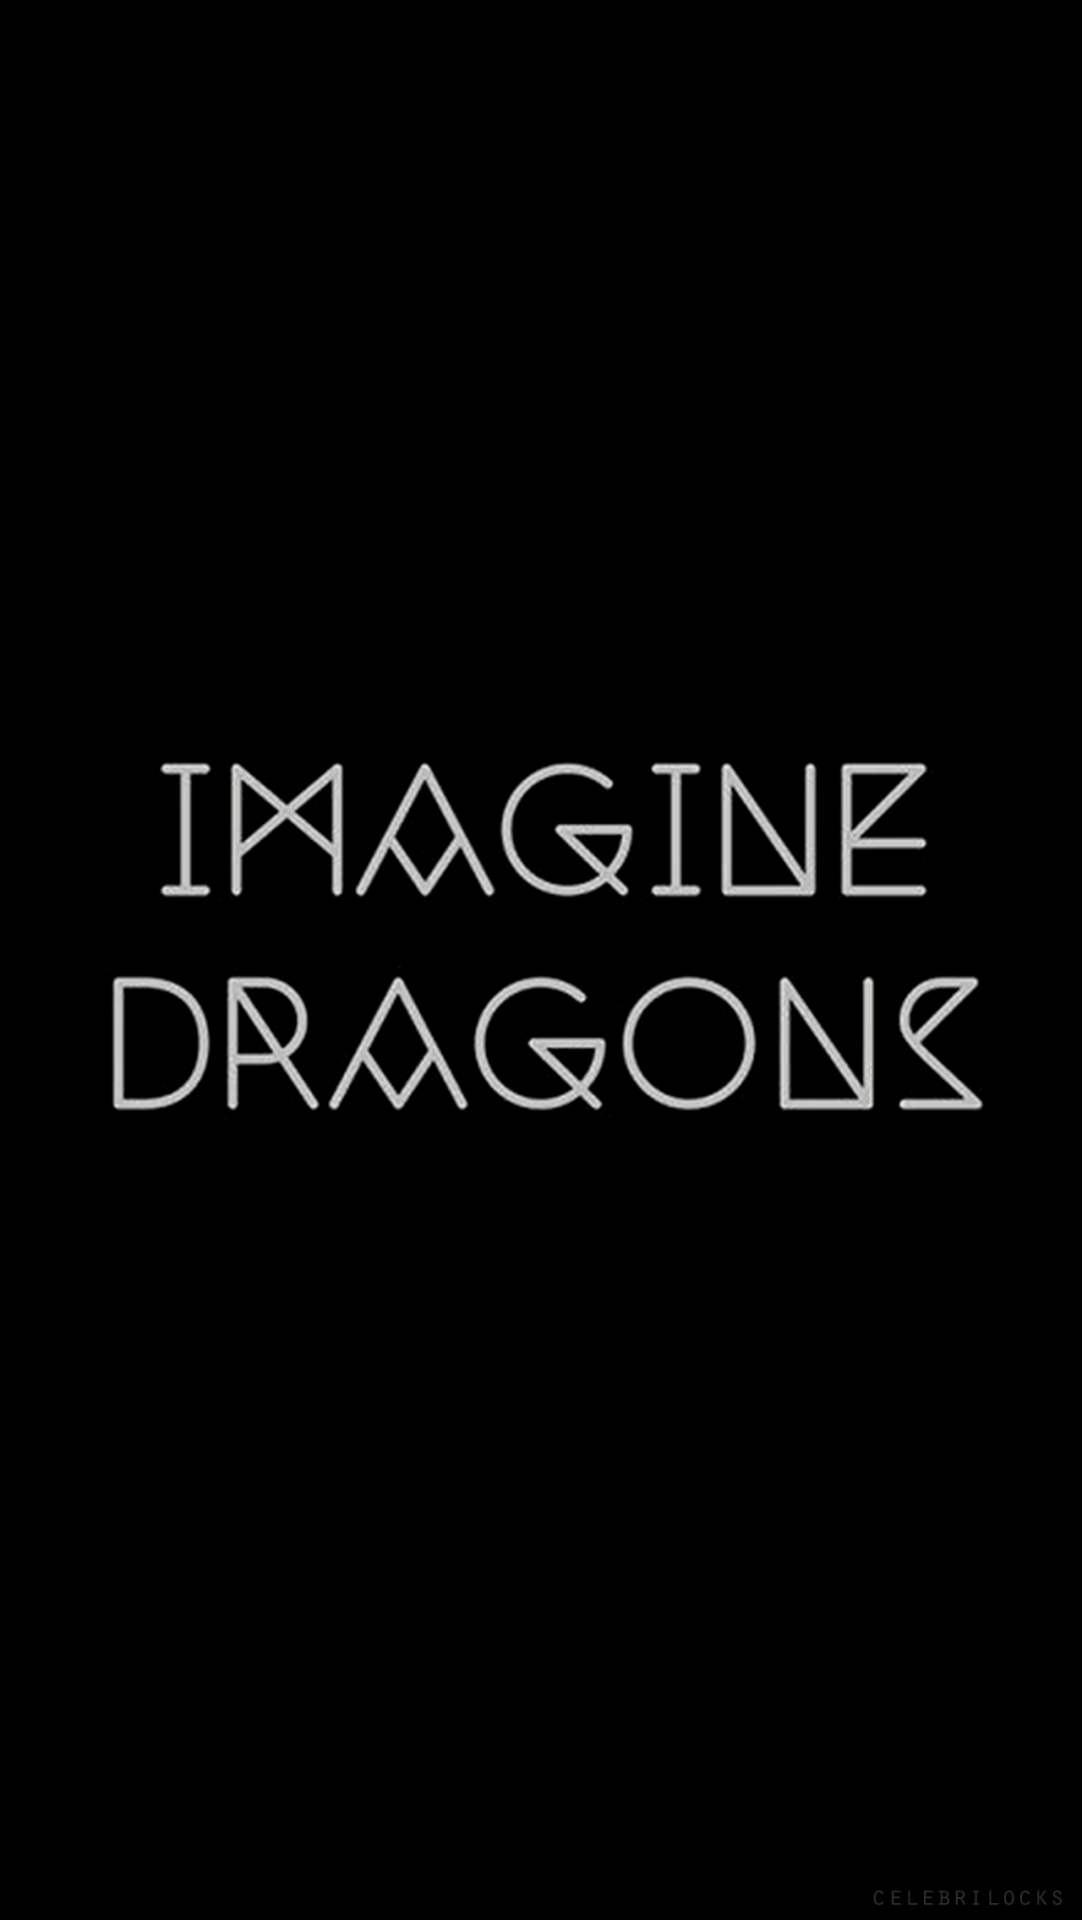 Imagine Dragons Mobile Wallpapers Wallpaper Cave